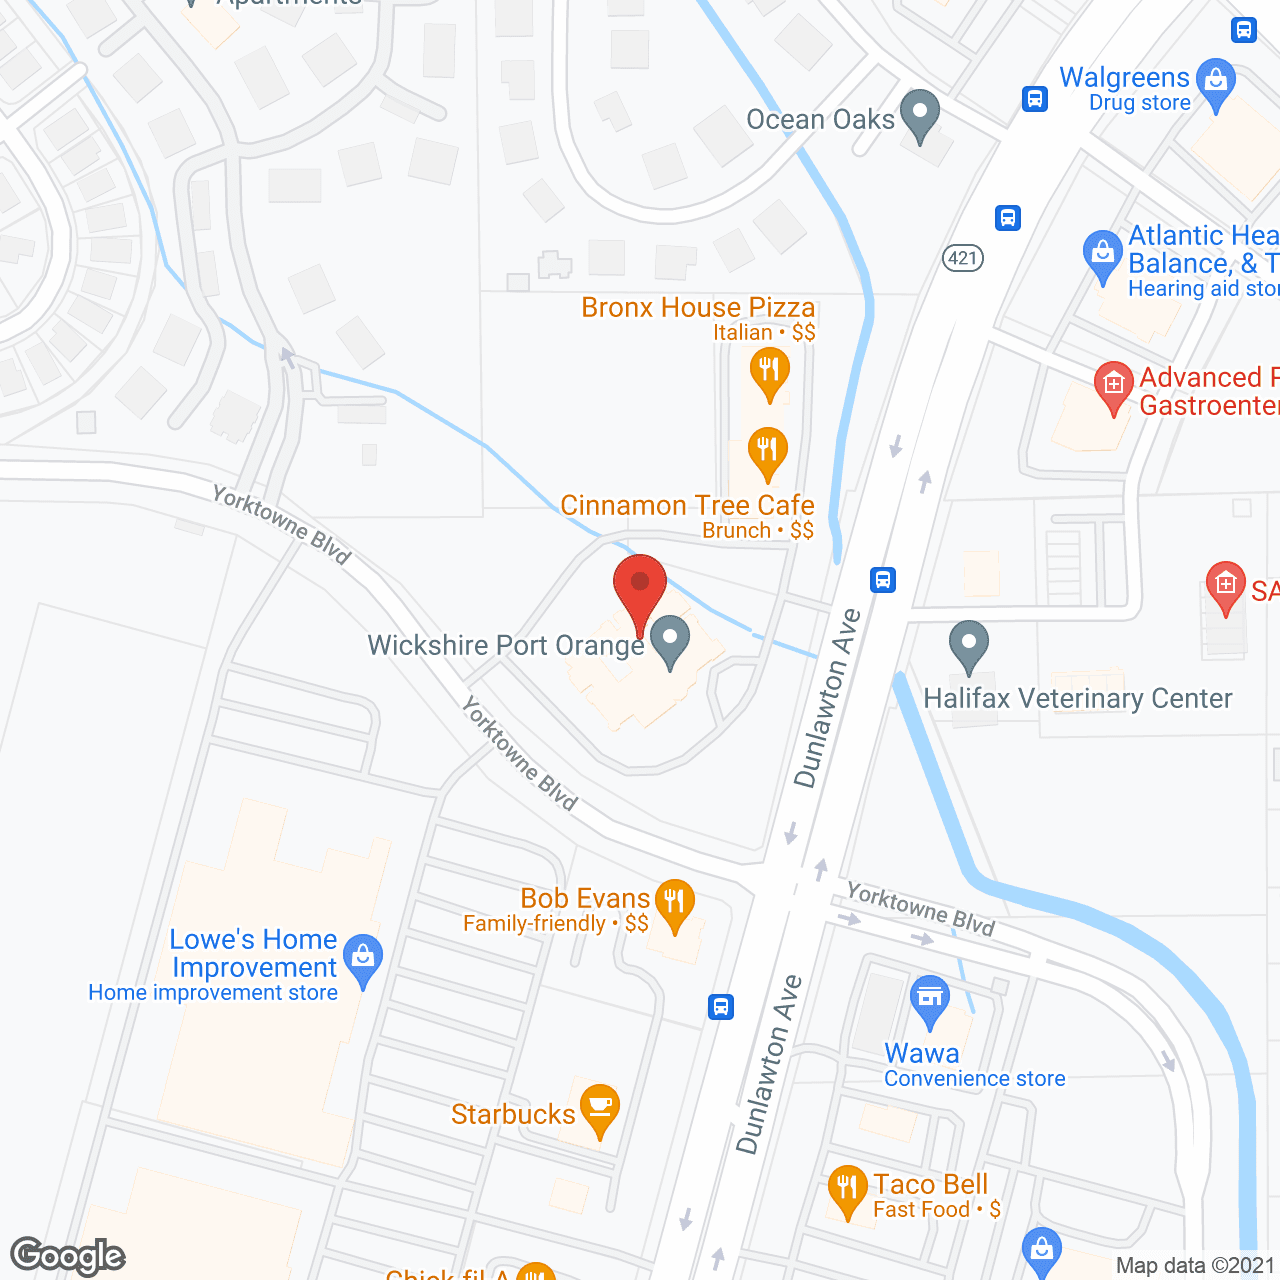 Wickshire Port Orange in google map